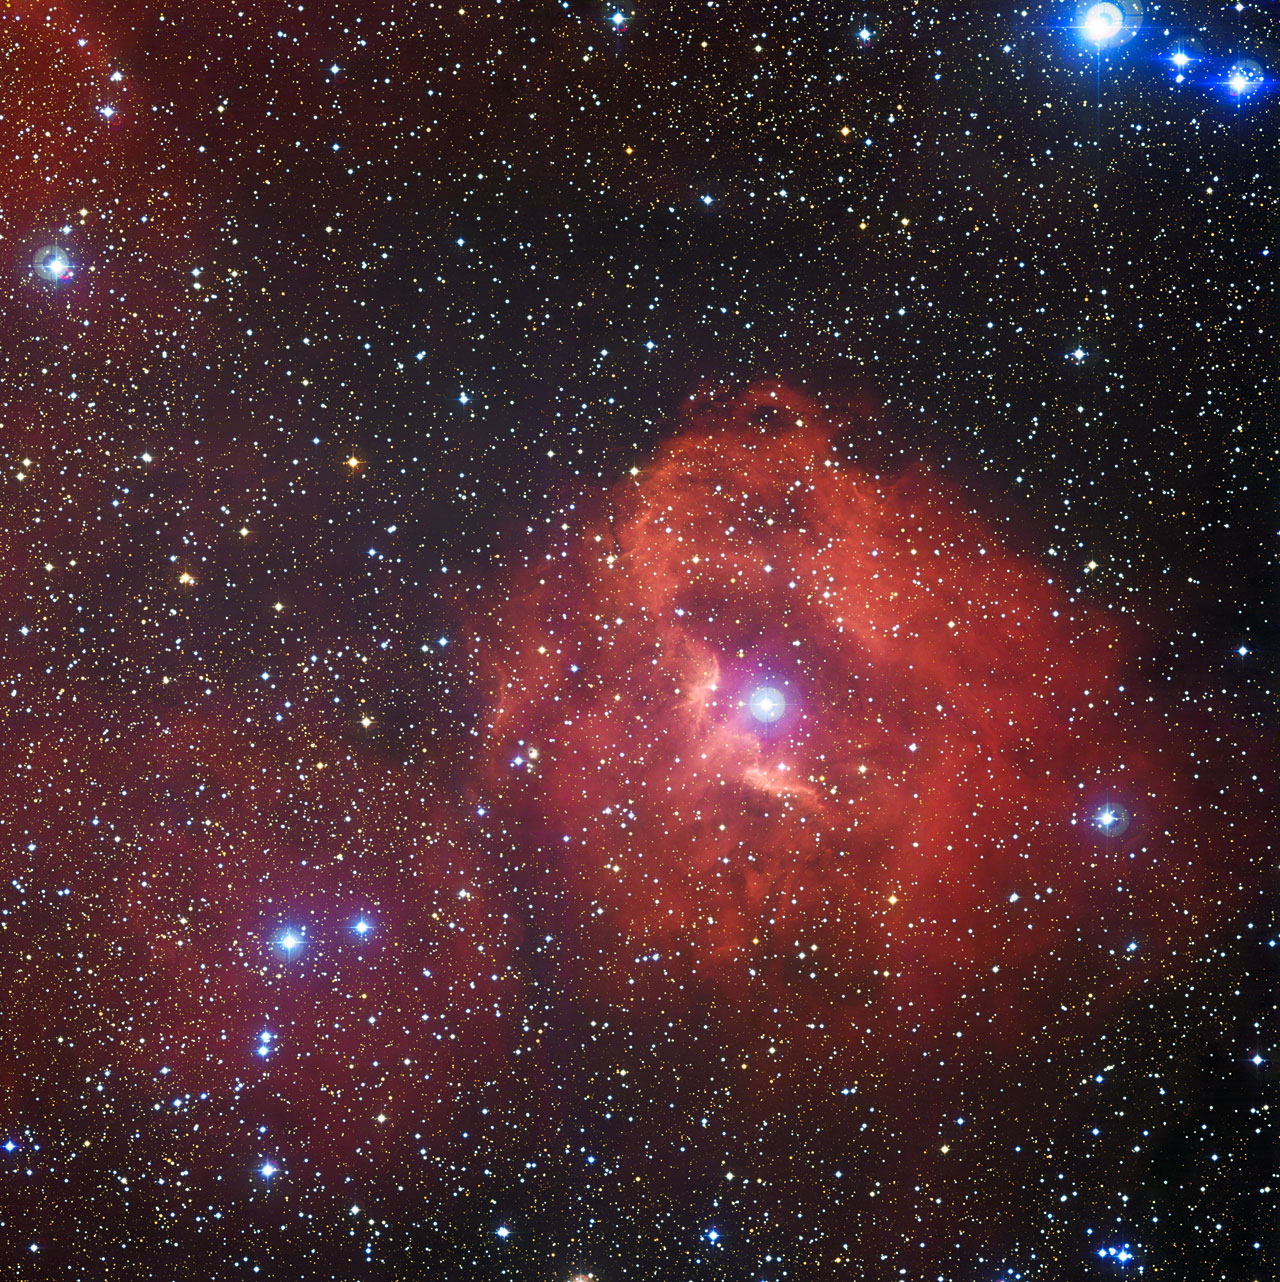 red space nebula